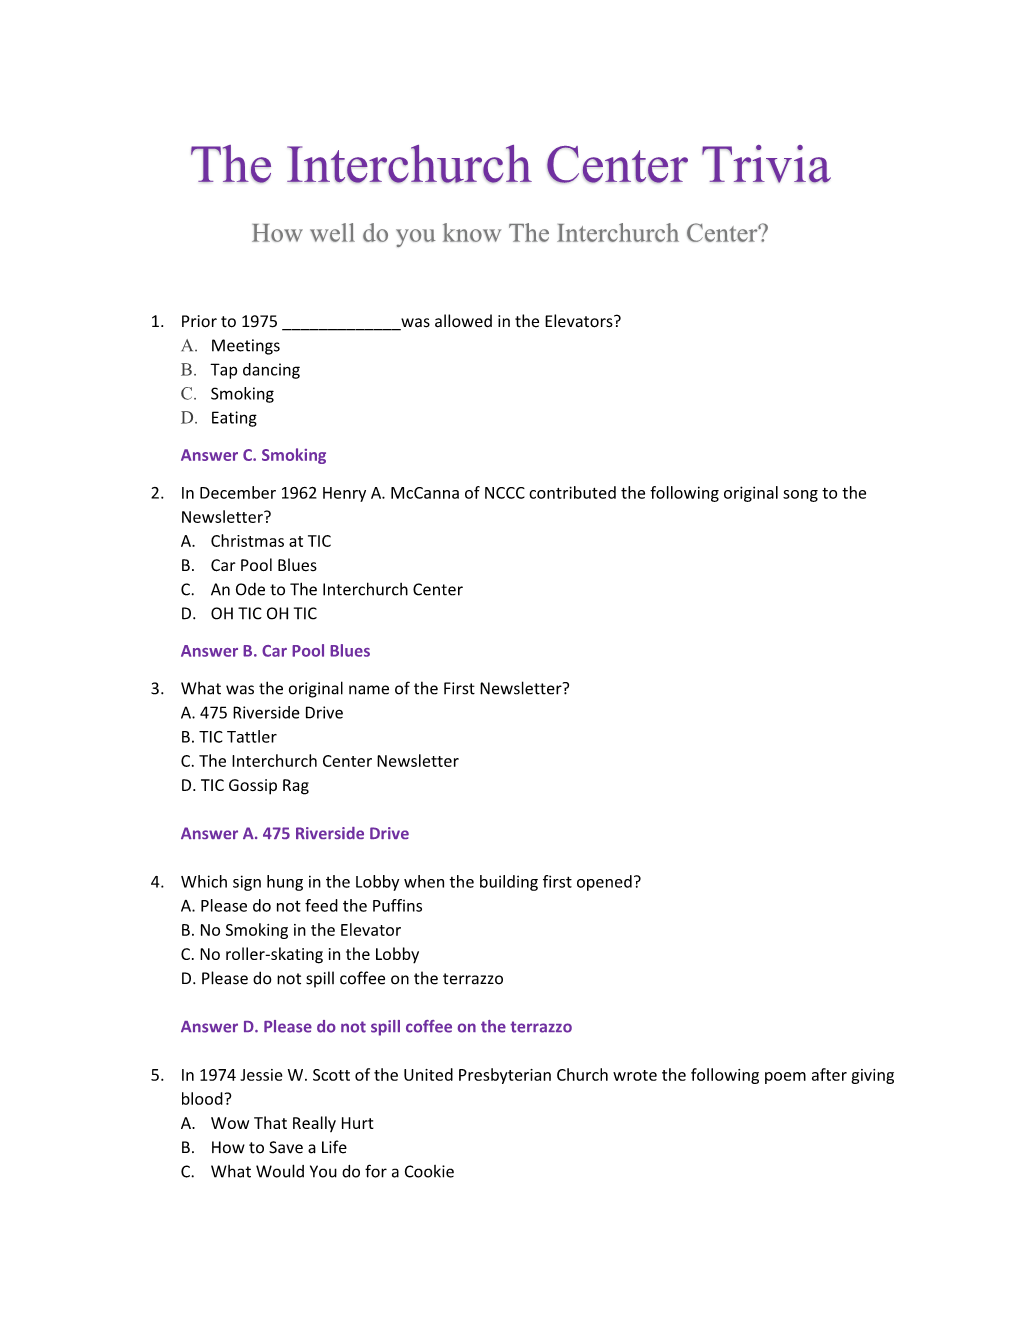 The Interchurch Center Trivia How Well Do You Know the Interchurch Center?